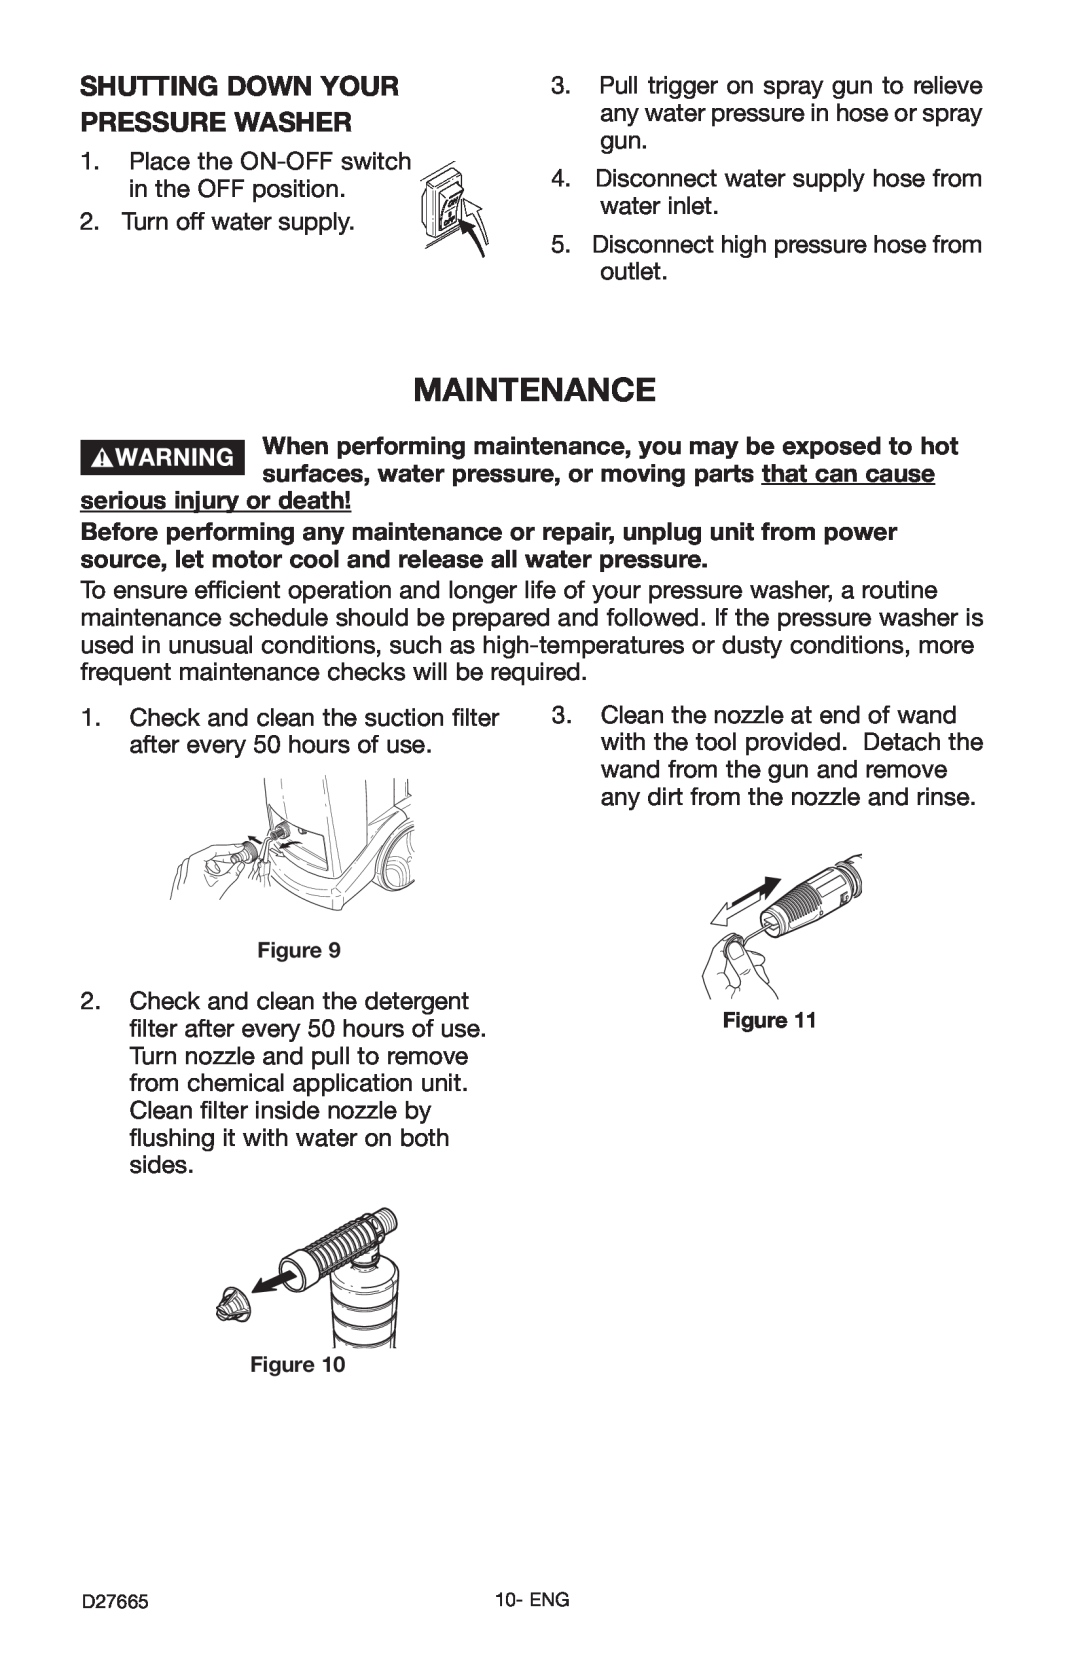 Delta D27665, D1600e instruction manual Maintenance, Shutting Down Your Pressure Washer 